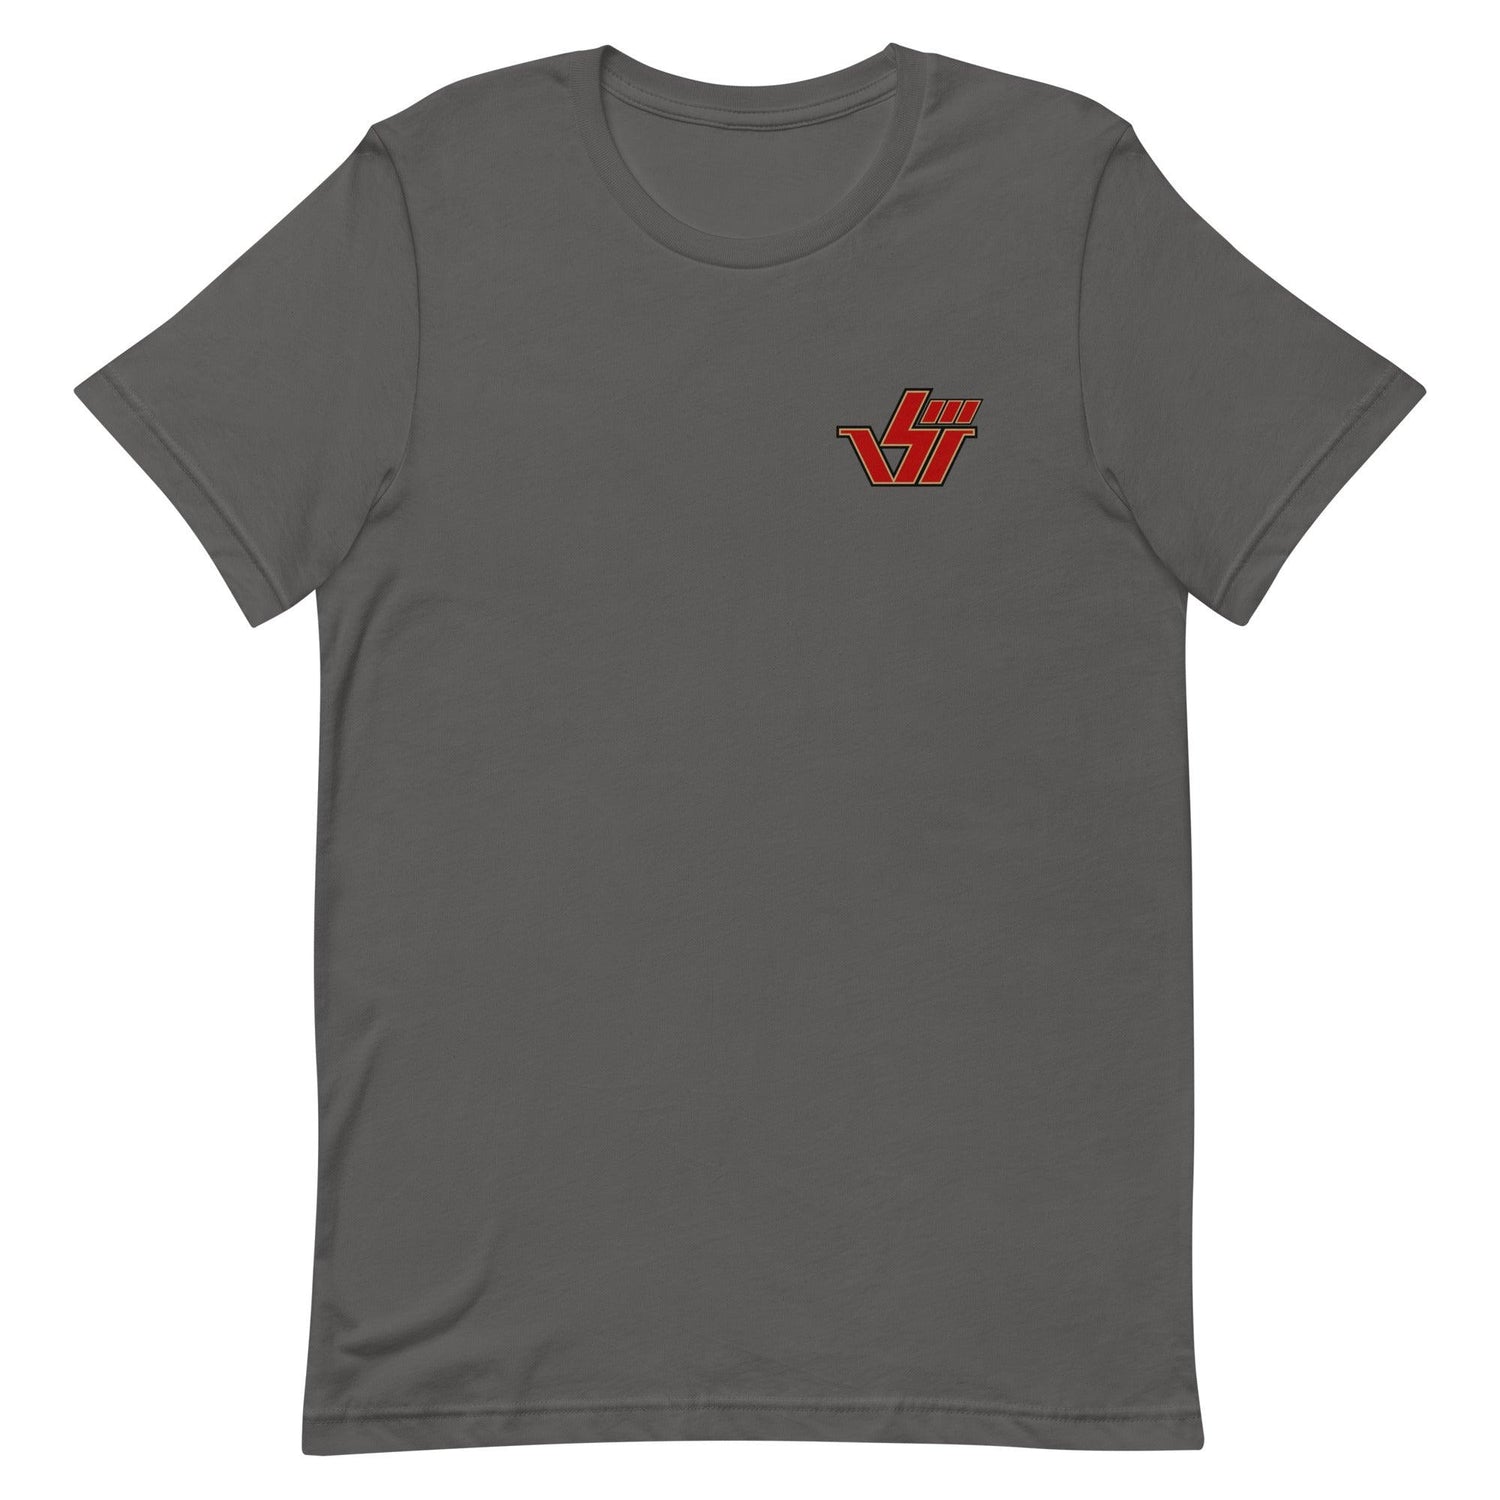 Samuel Womack "Essential" t-shirt - Fan Arch